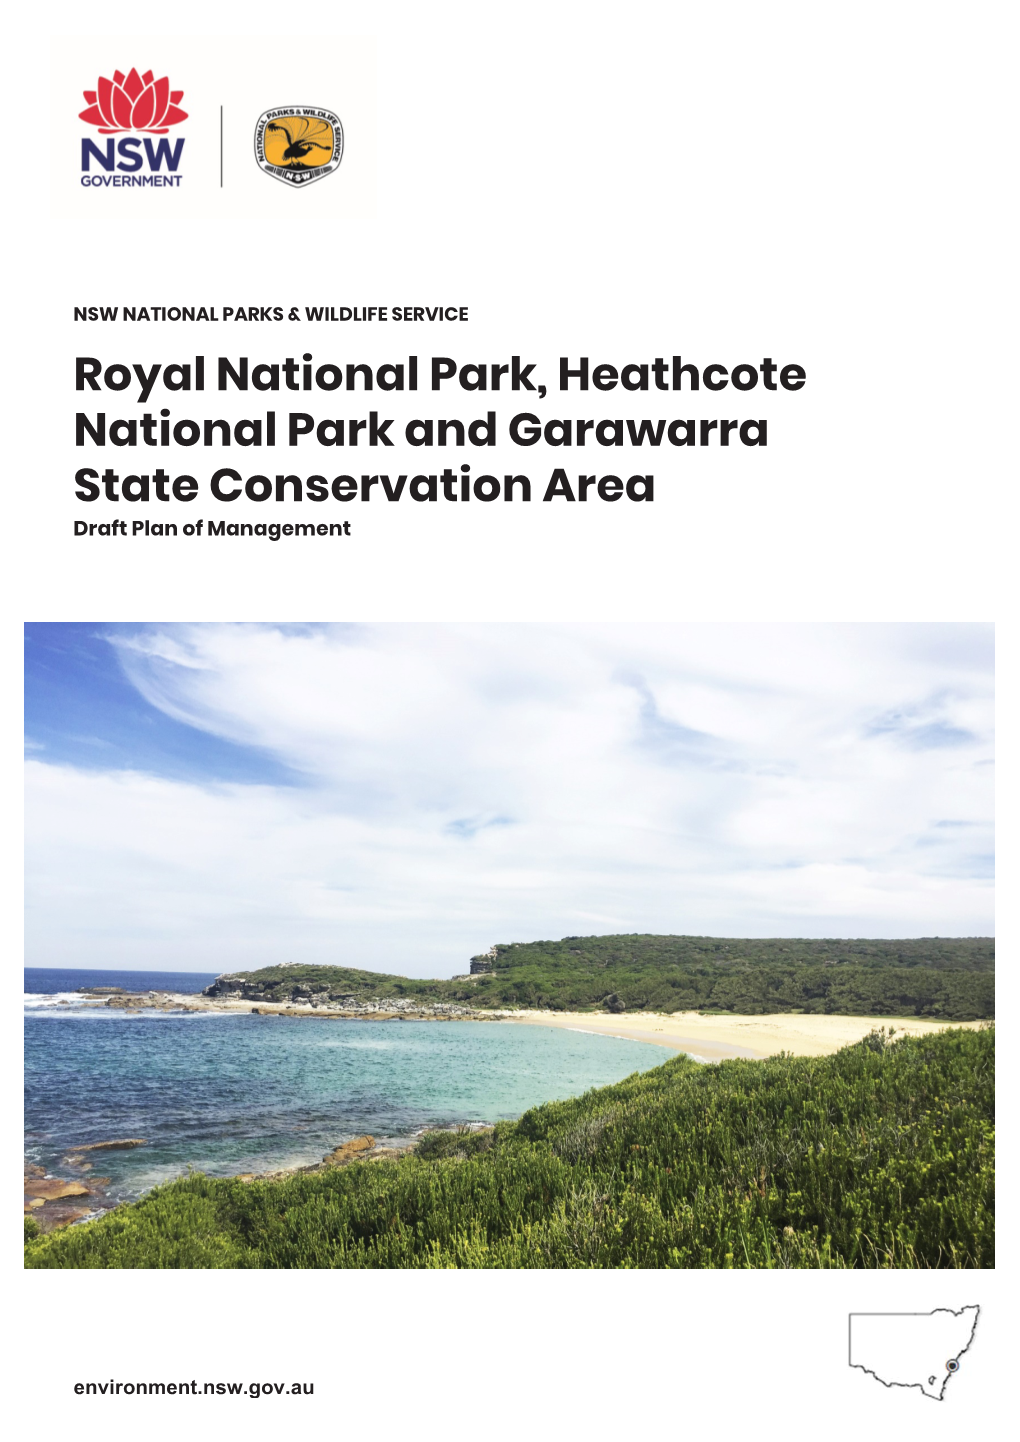 Royal National Park, Heathcote National Park and Garawarra State Conservation Area Draft Plan of Management